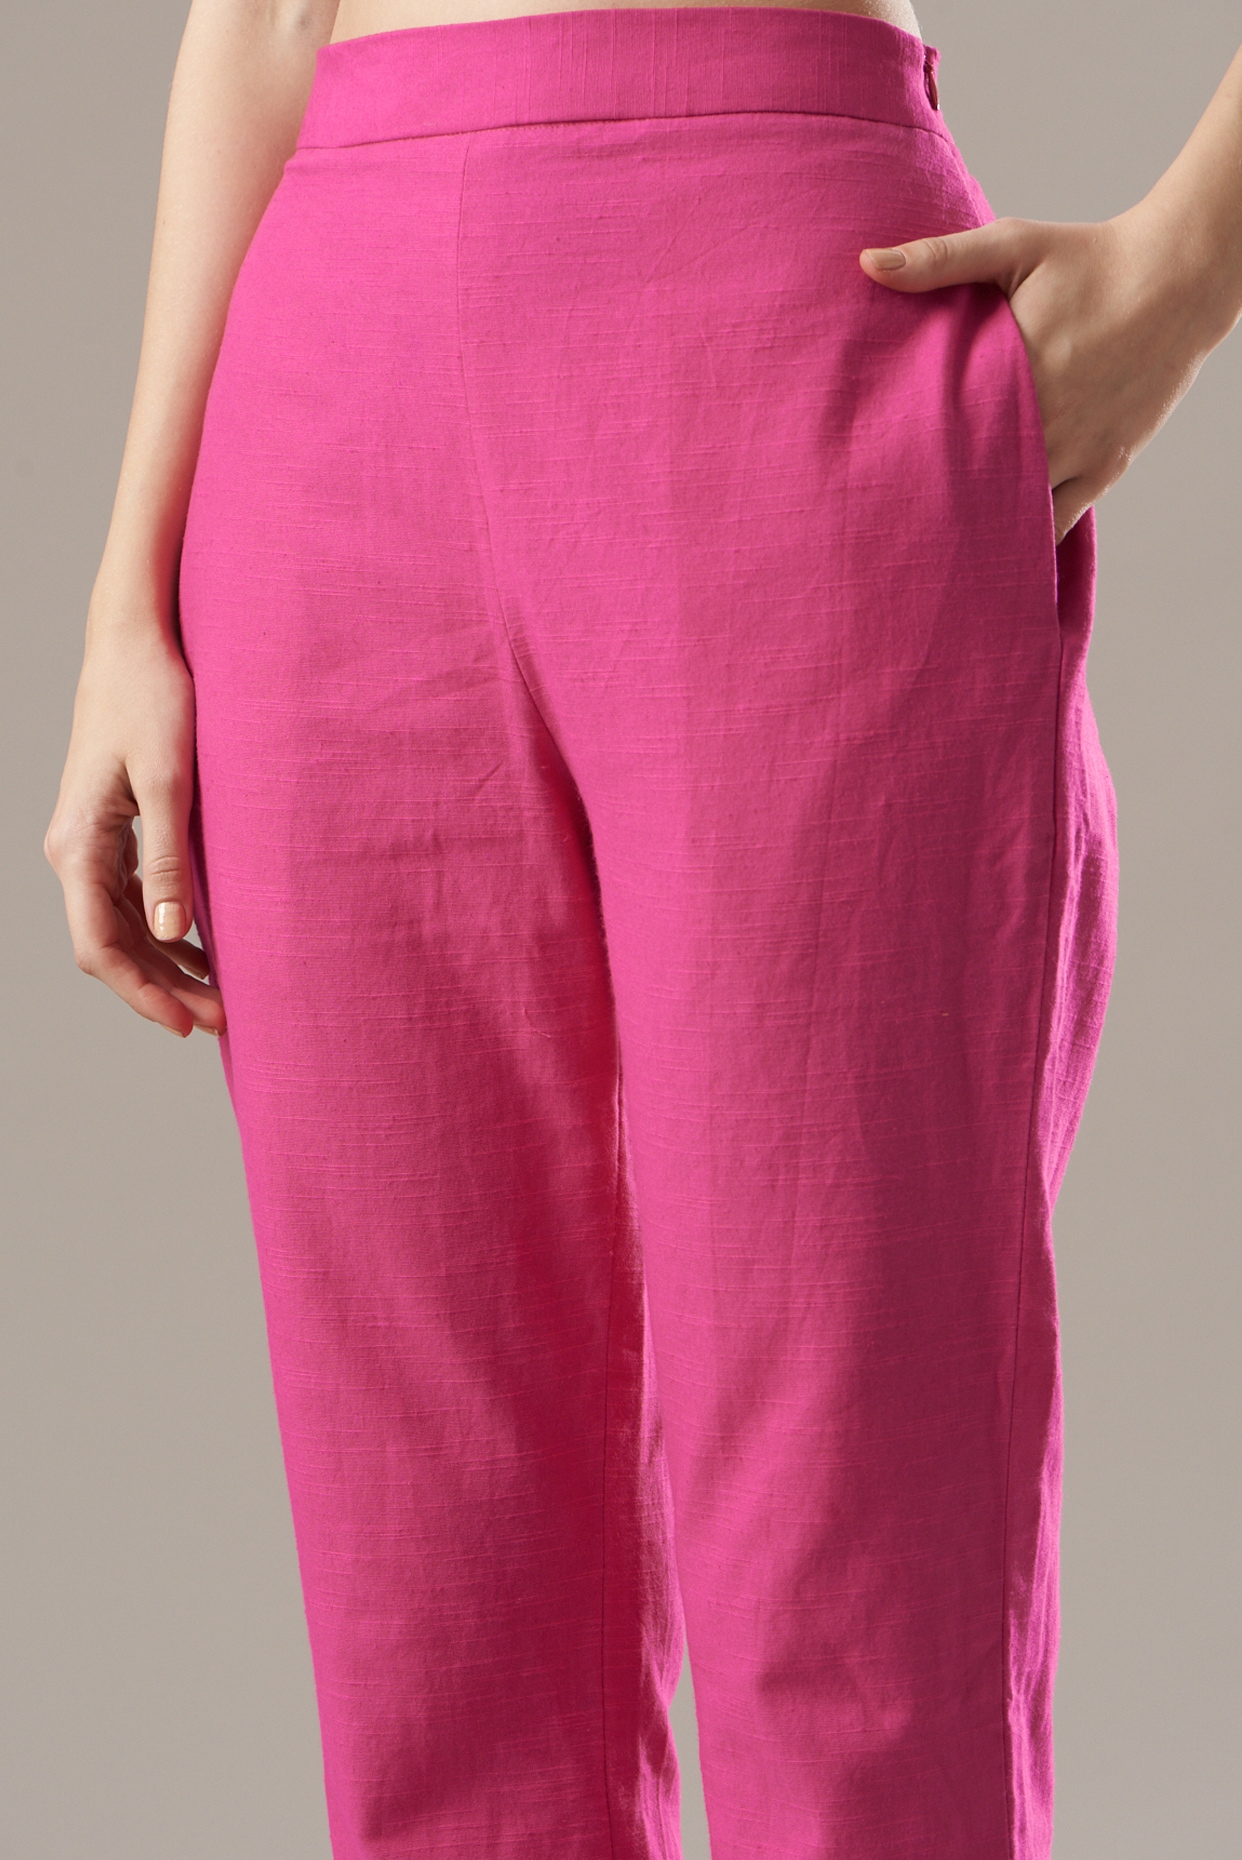 Linen Cotton Trousers  Buy Linen Cotton Trousers online in India